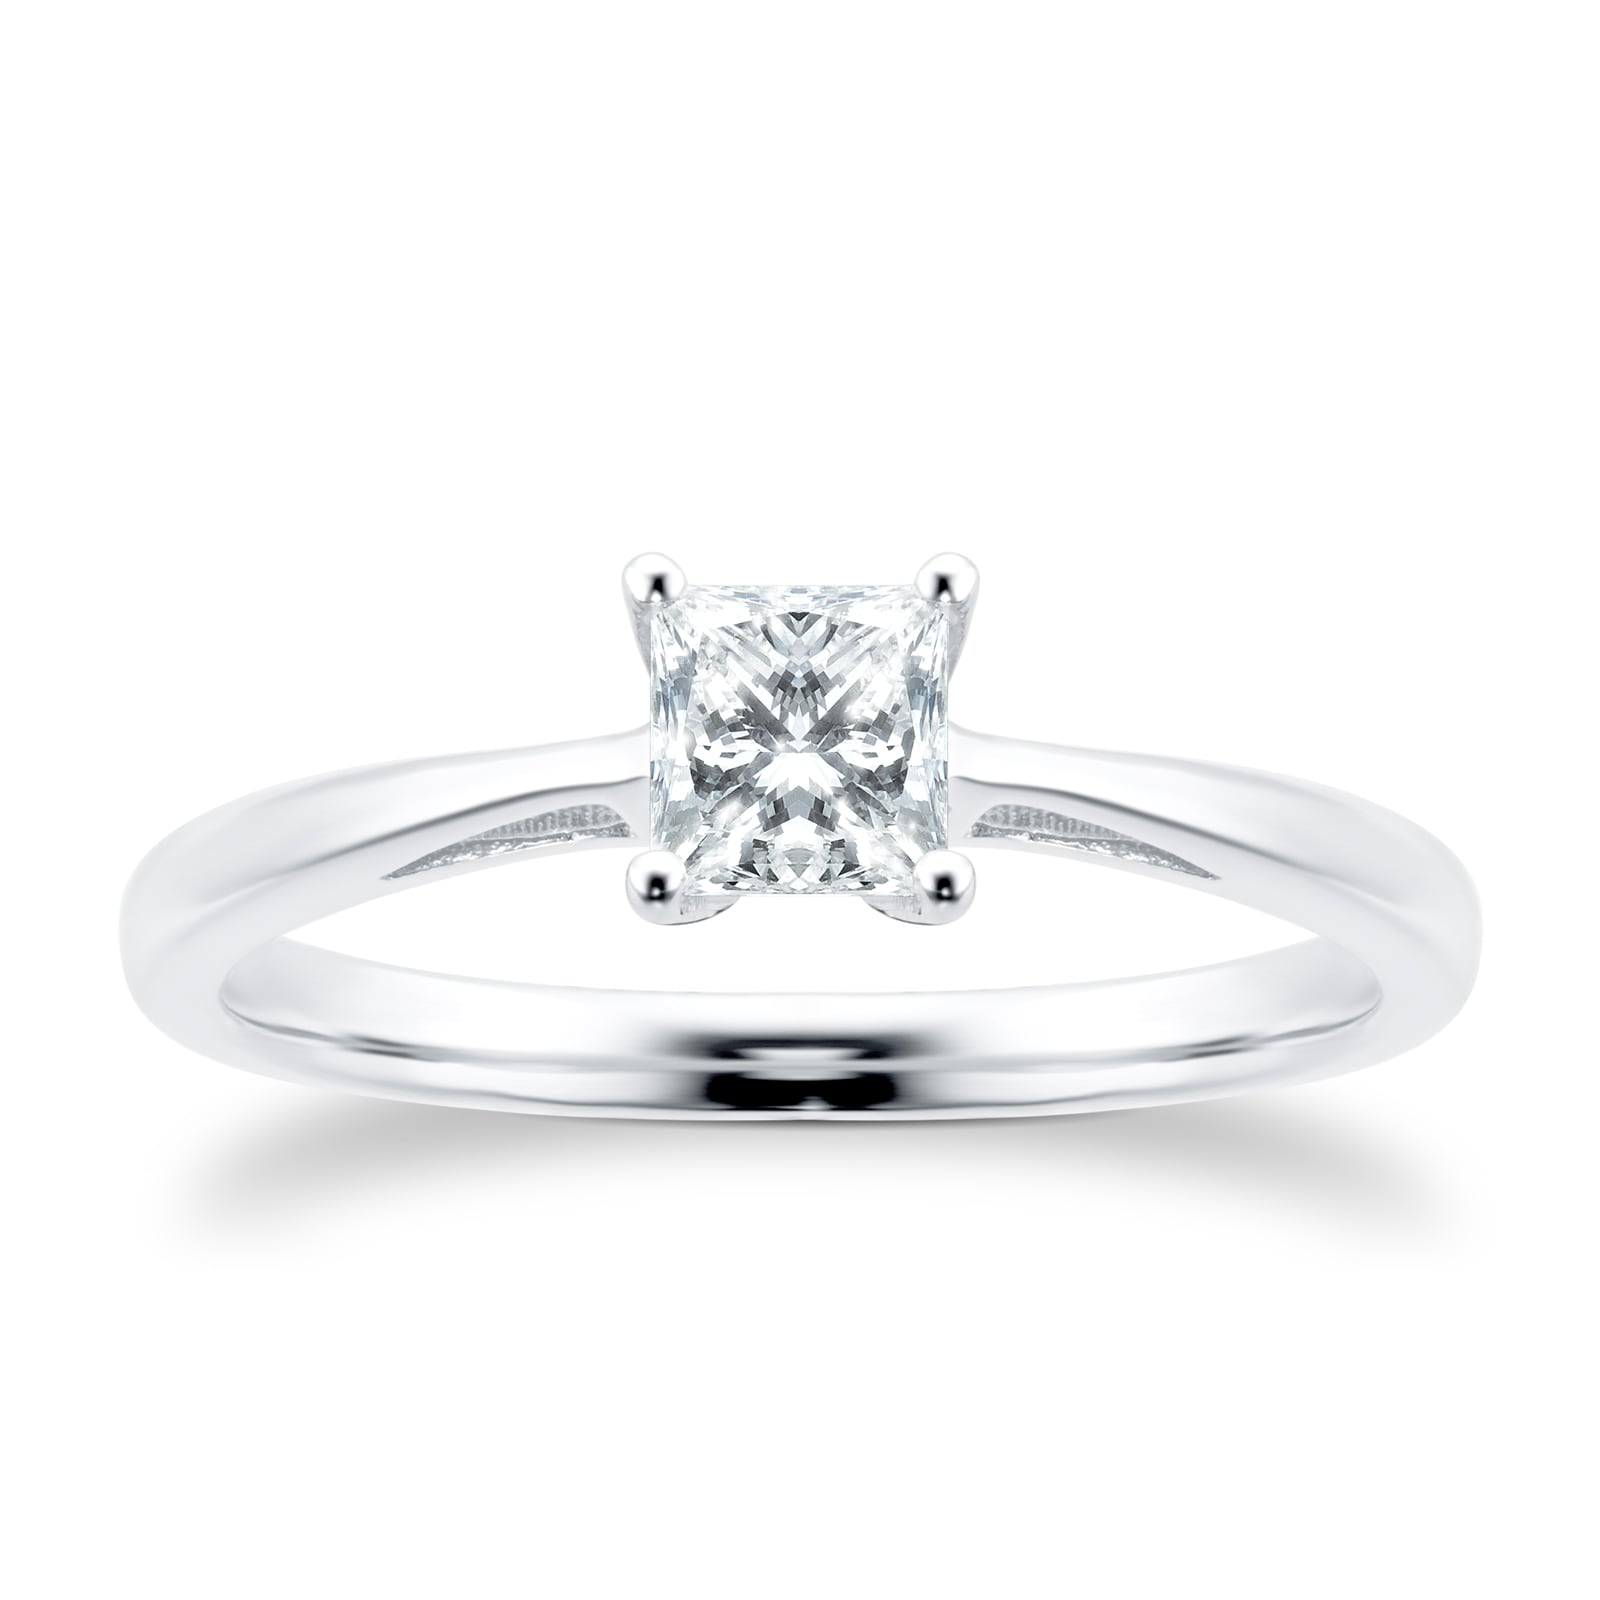 18ct White Gold 0.50ct Princess Cut Diamond Engagement Ring - Ring Size P